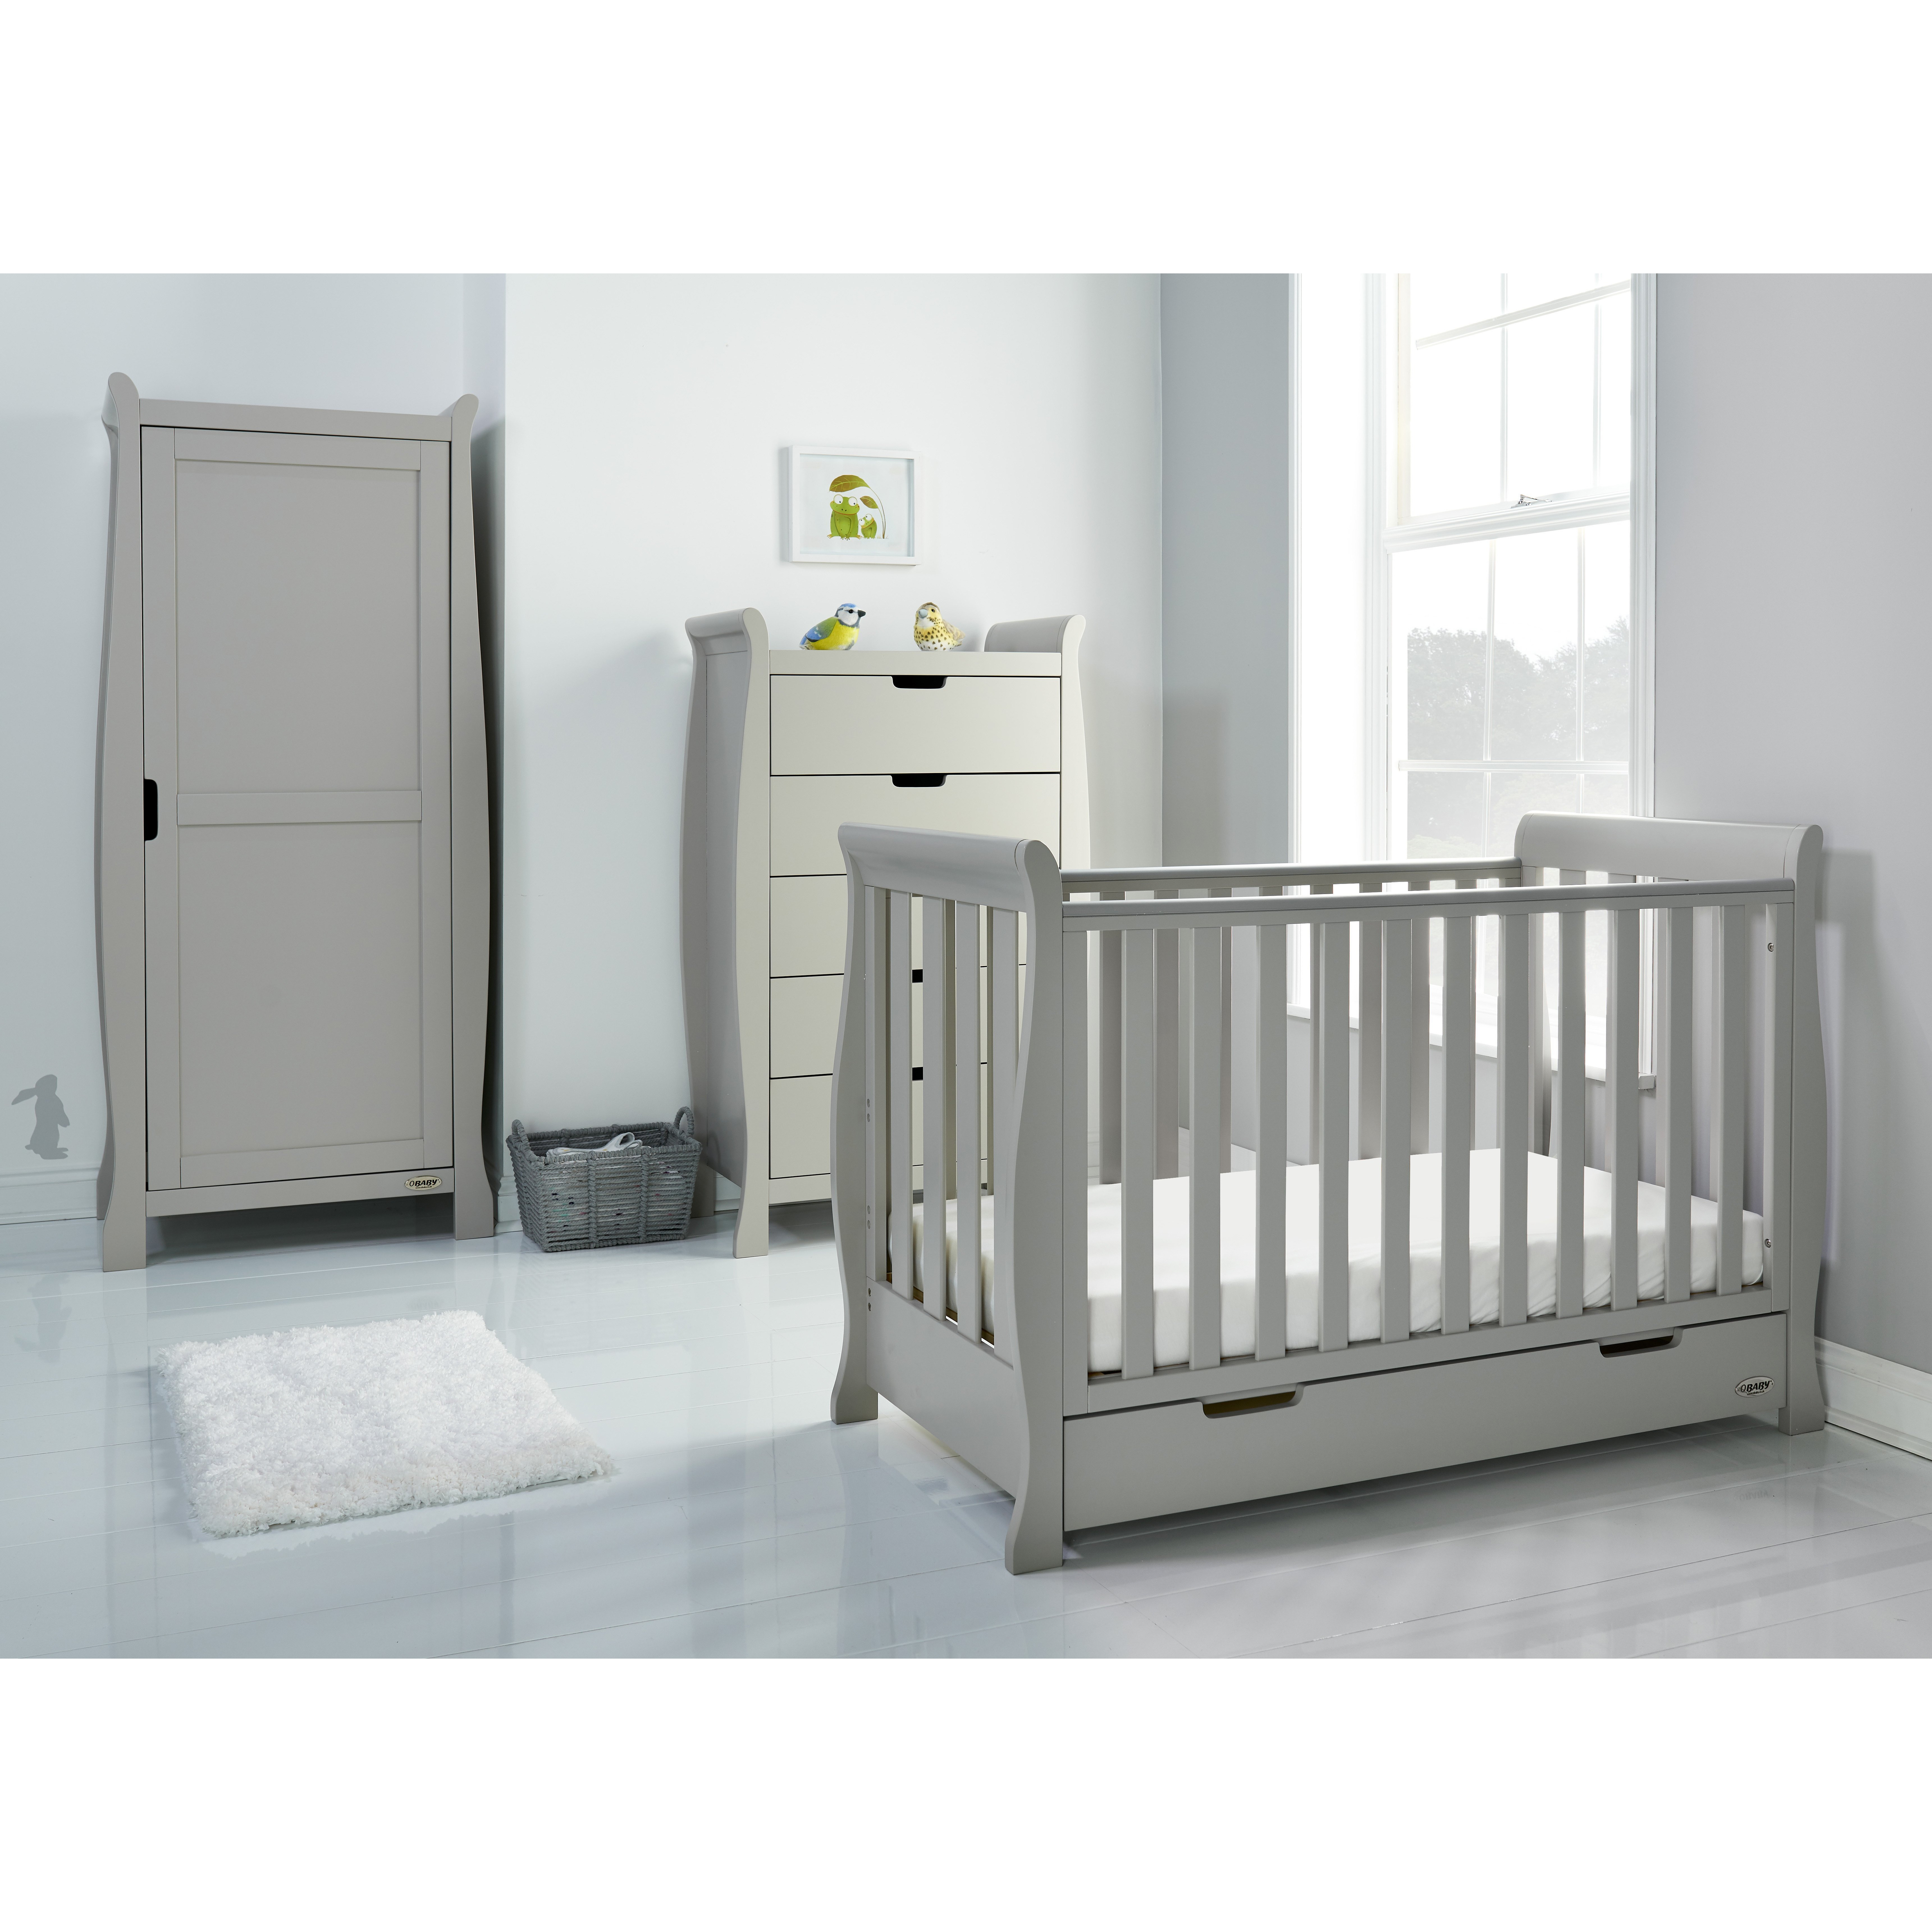 Obaby Stamford Mini Sleigh Cot Bed - Warm Grey - image 1